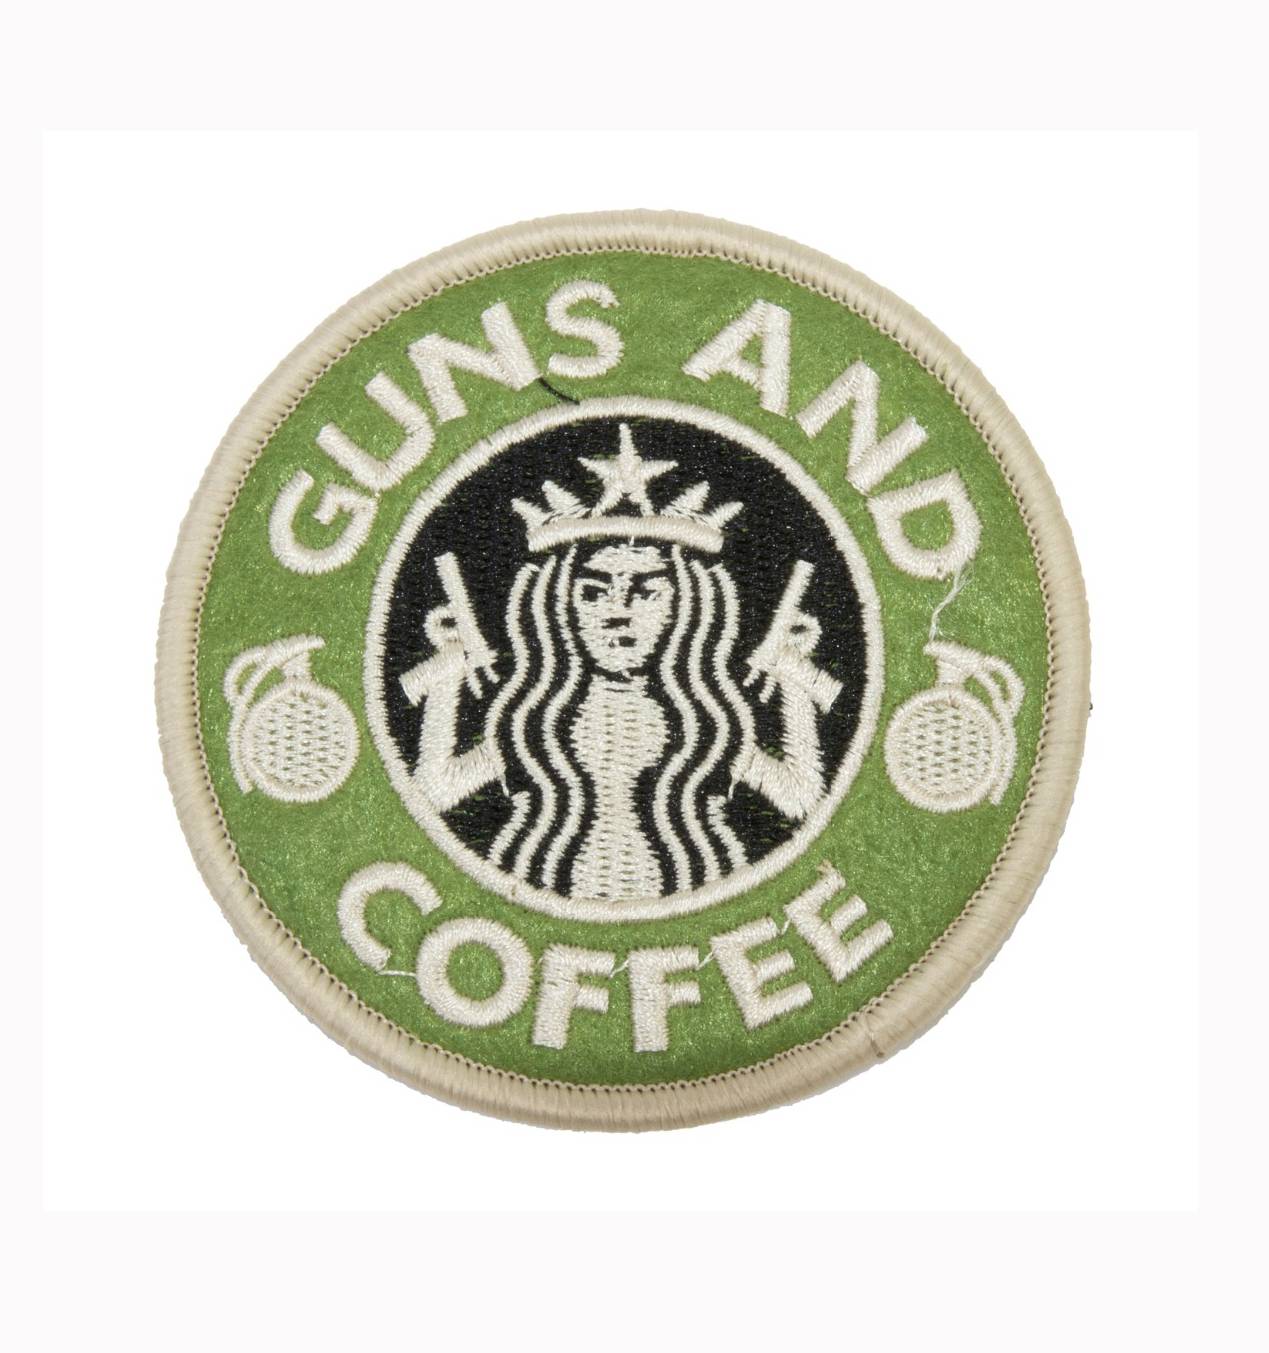 Нашивка "Guns And Coffee" на липучке